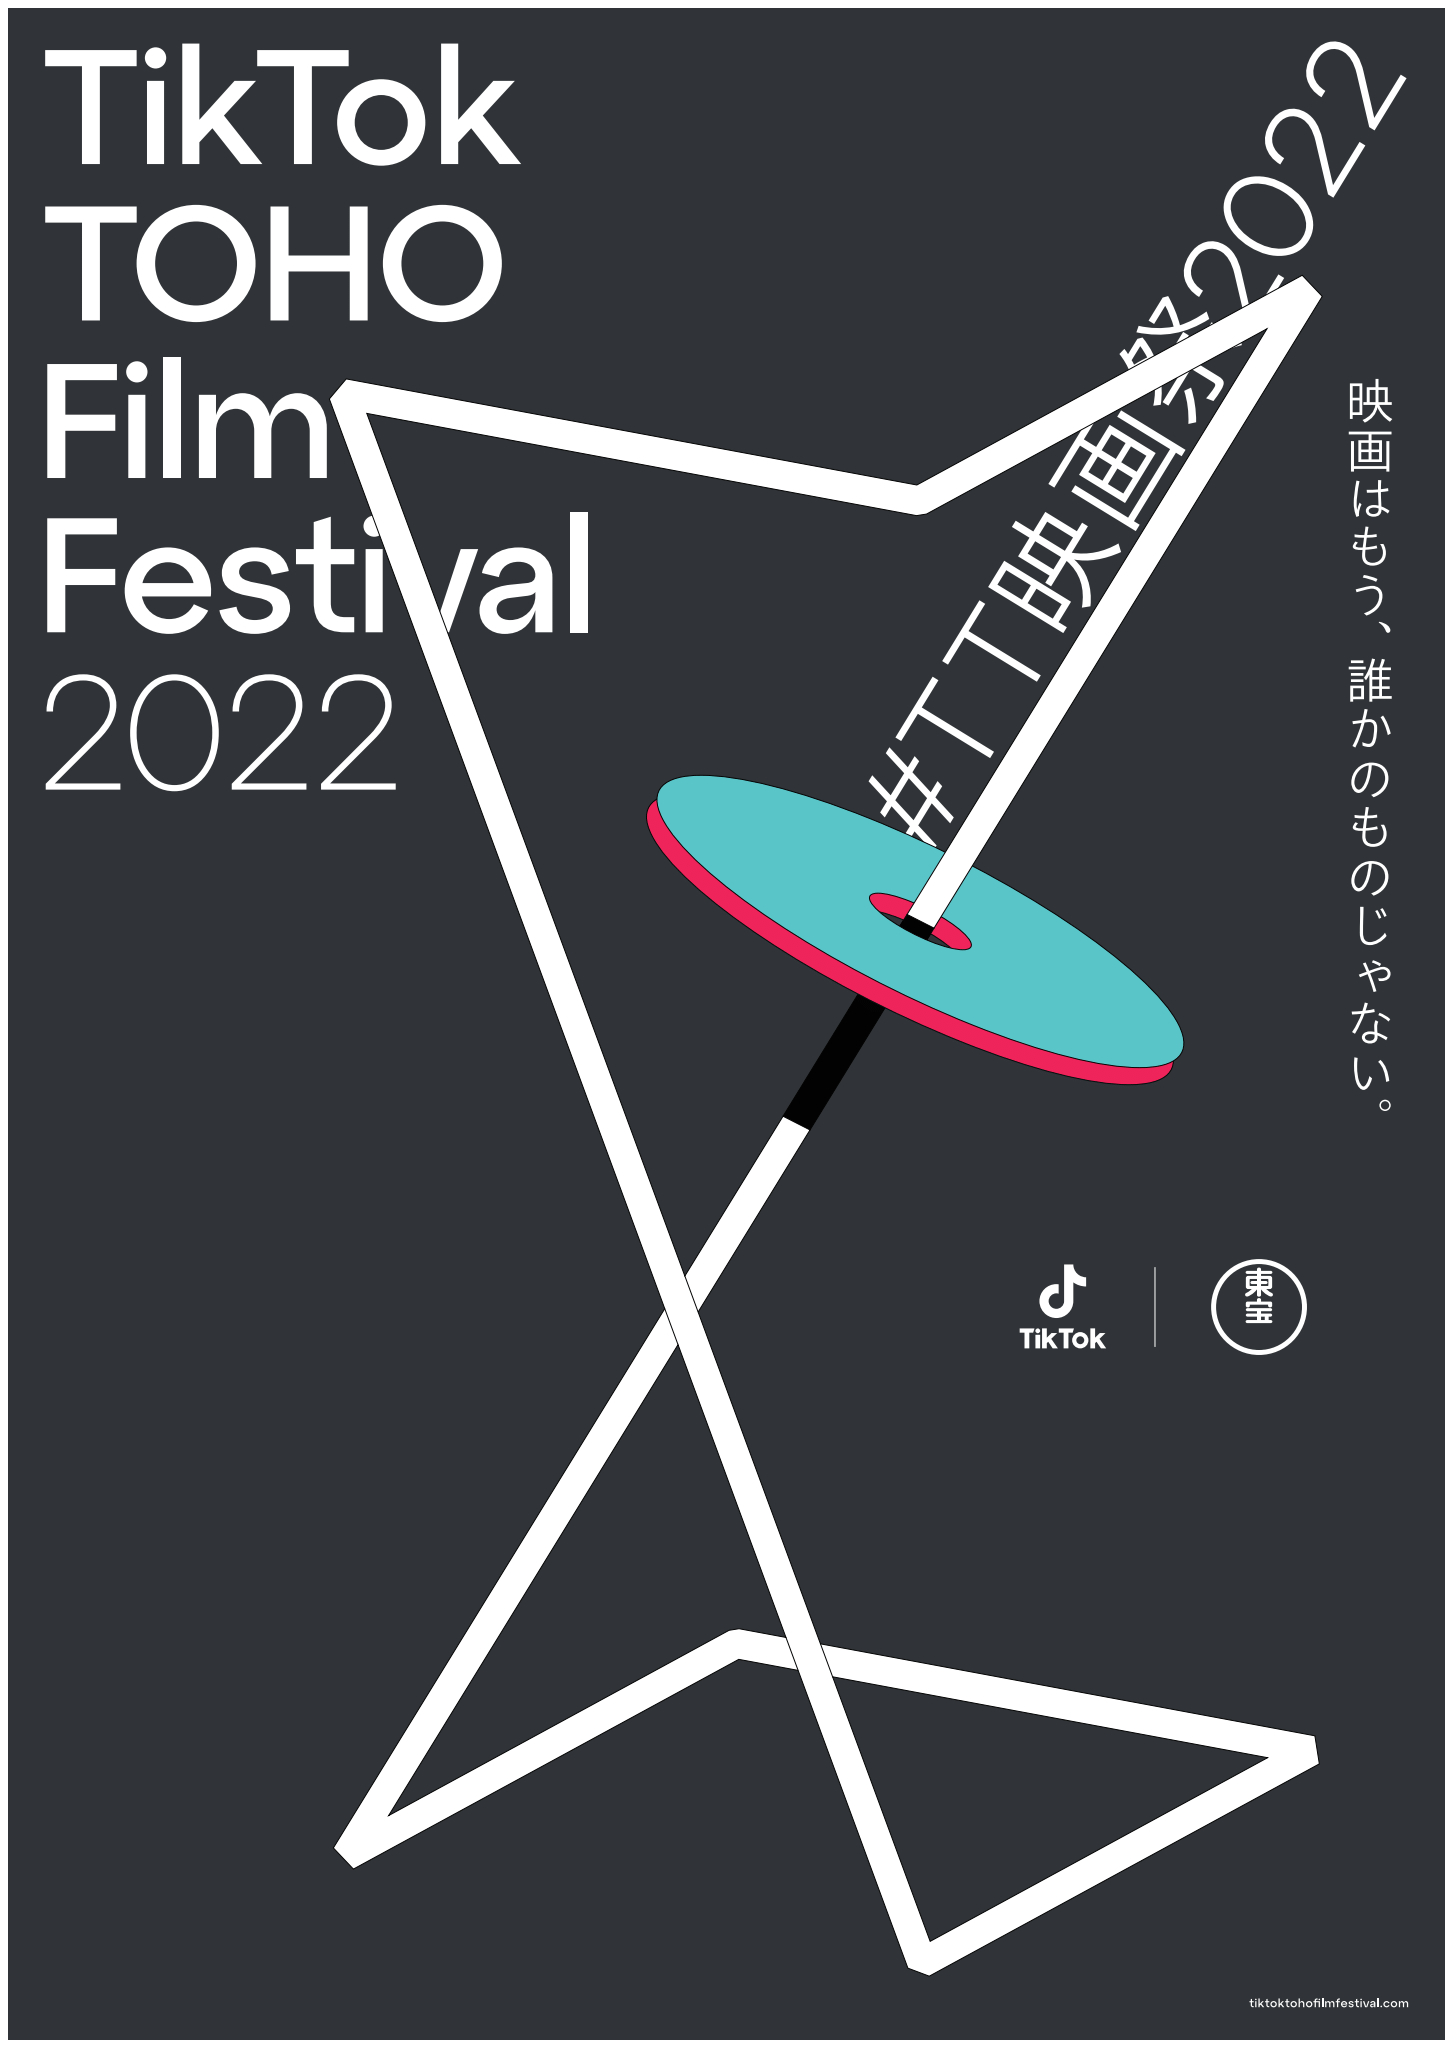 『TikTok TOHO Film Festival 2022』